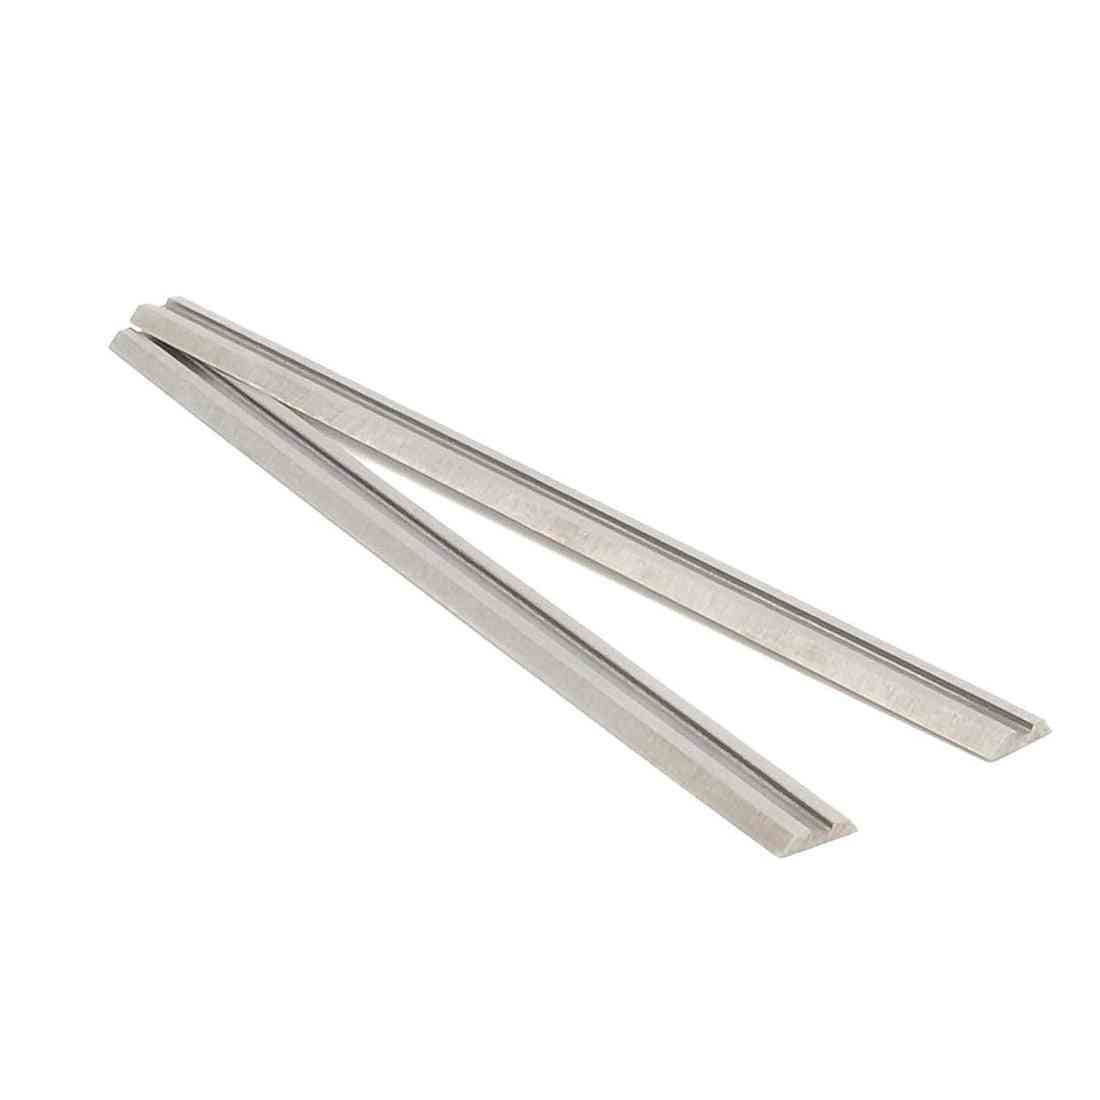 Carbide Planer Blade, Wood Planer Knife, Machinery Parts